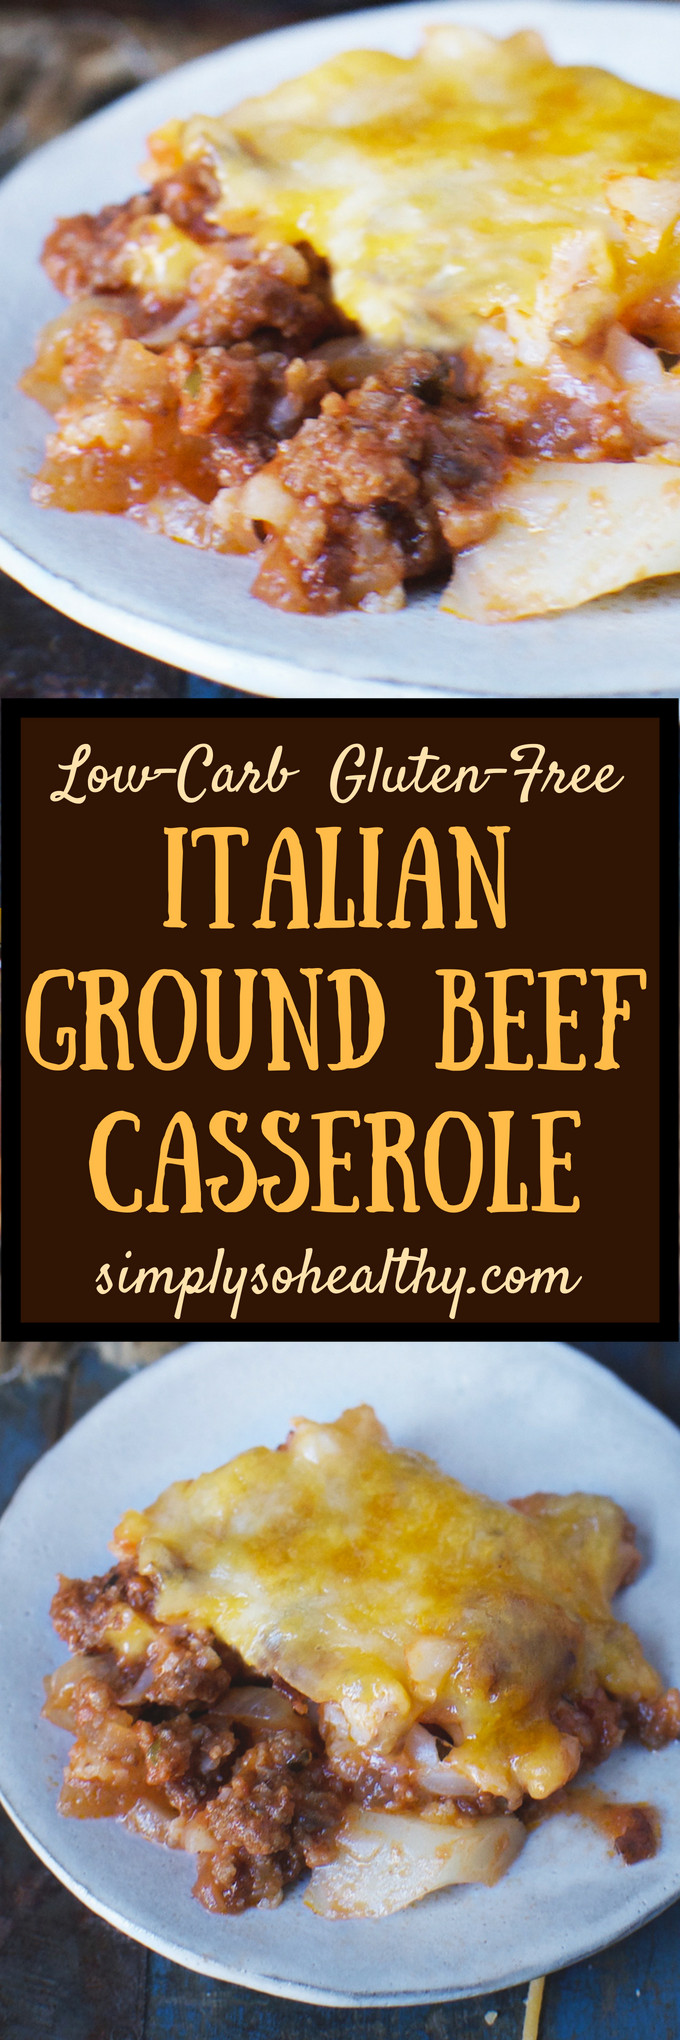 Keto Ground Beef Casserole
 Keto Friendly Italian Ground Beef Casserole Recipe